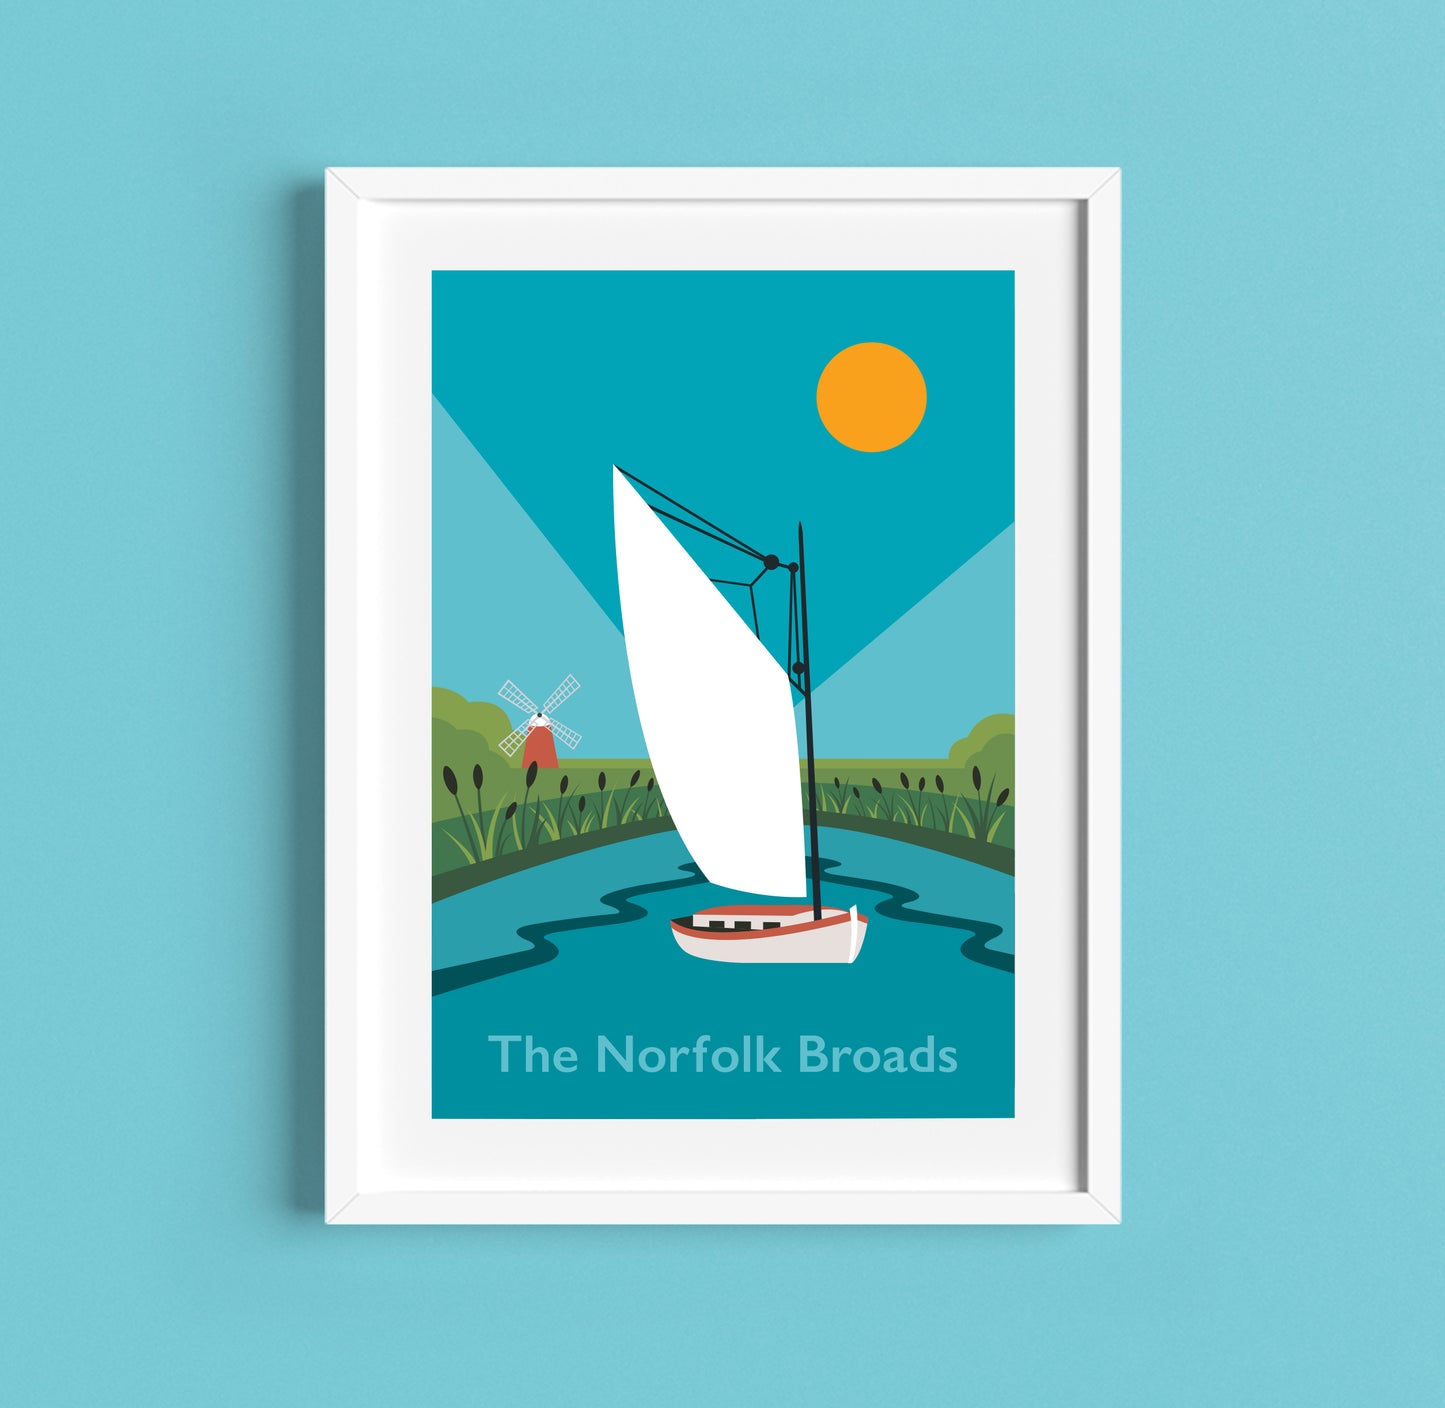 Norfolk Broads Travel Poster Print - Art Deco Travel Poster Art